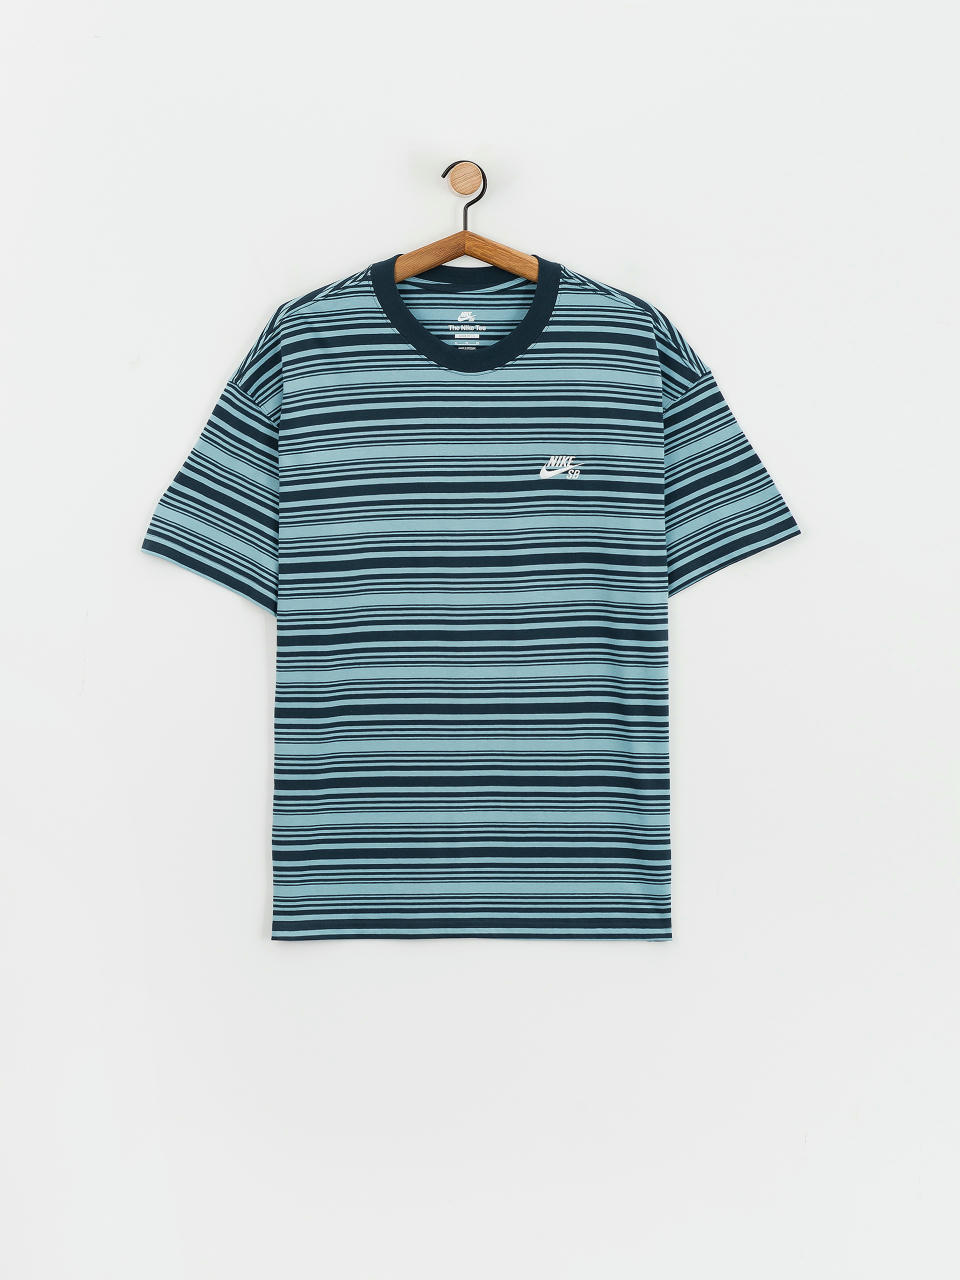 T-shirt Nike SB Stripes (denim turq)